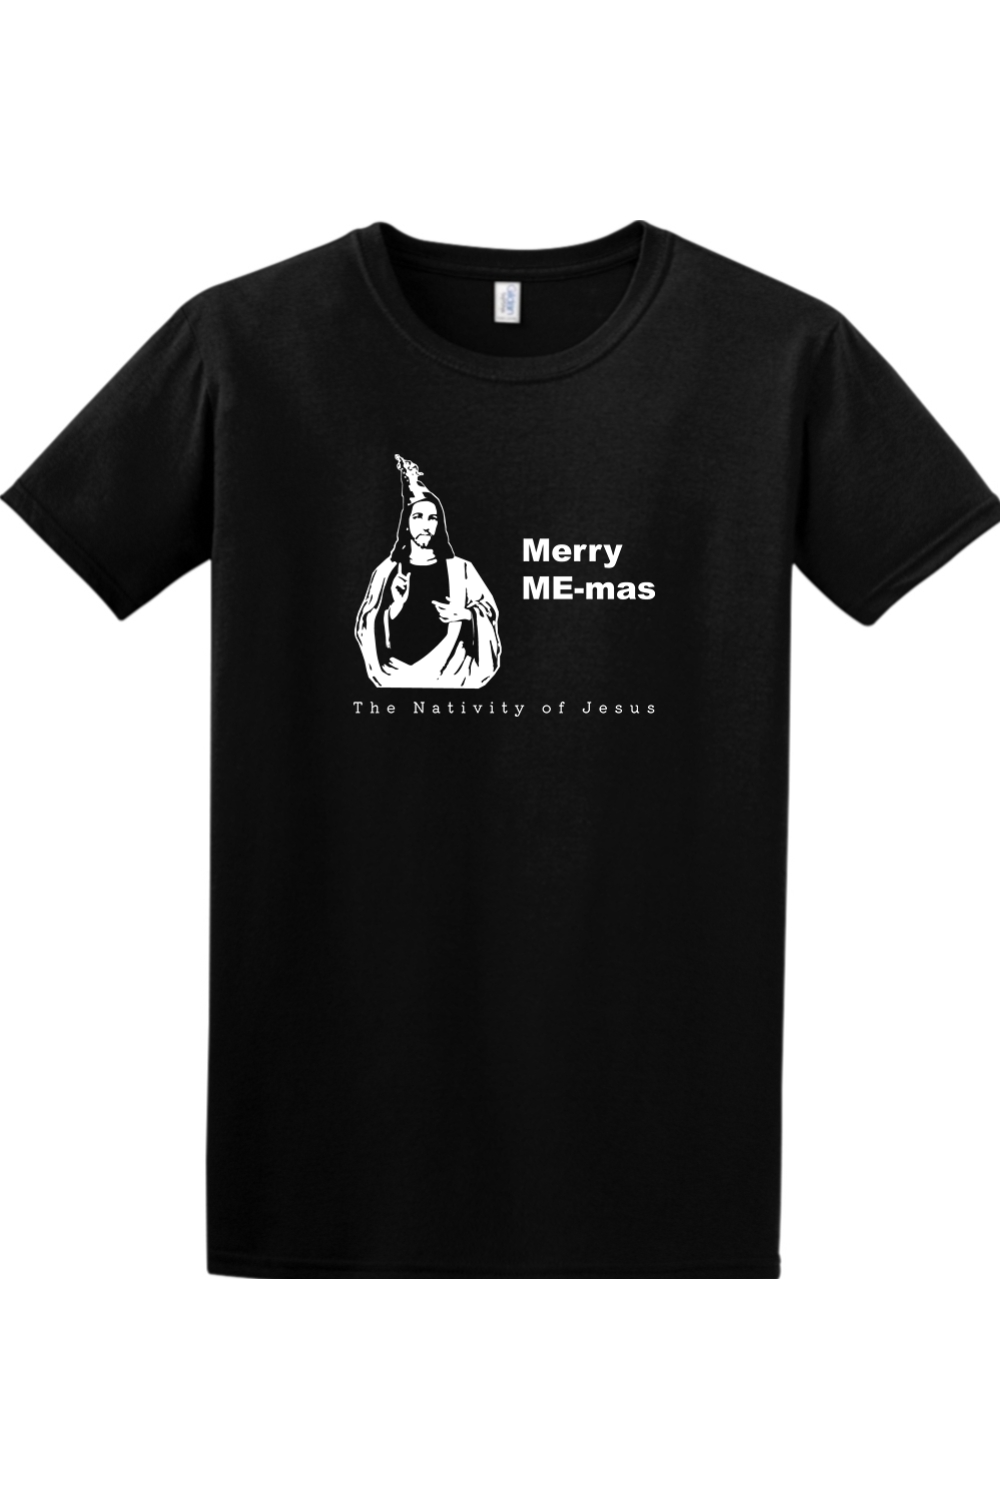 Merry ME-mas Adult T-shirt